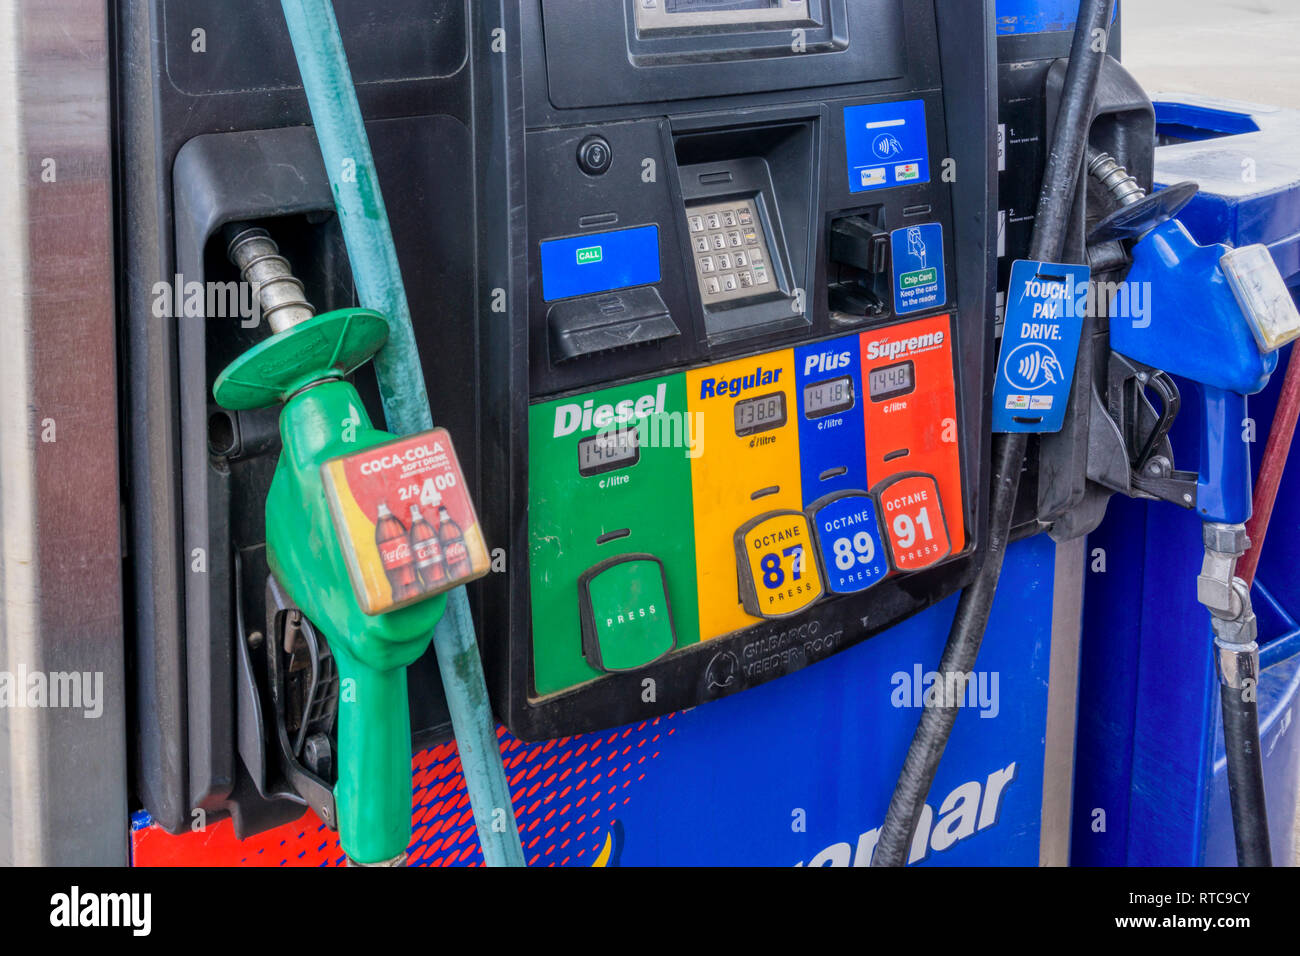 Self service petrol pump with Diesel, Regular, Plus and Supreme grades. Stock Photo